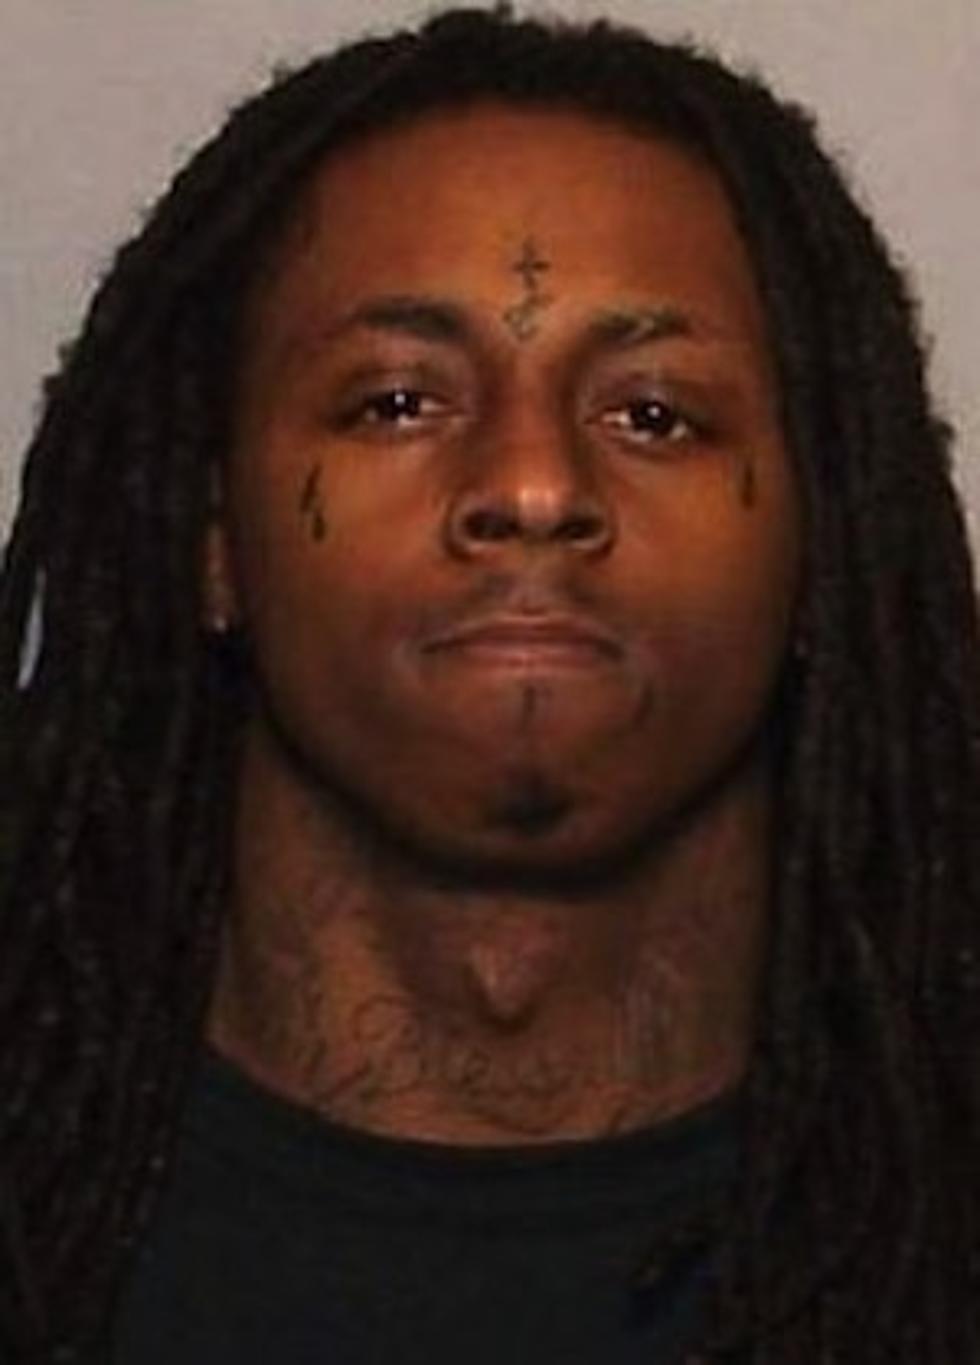 Lil Wayne &#8212; Musician Mug Shot